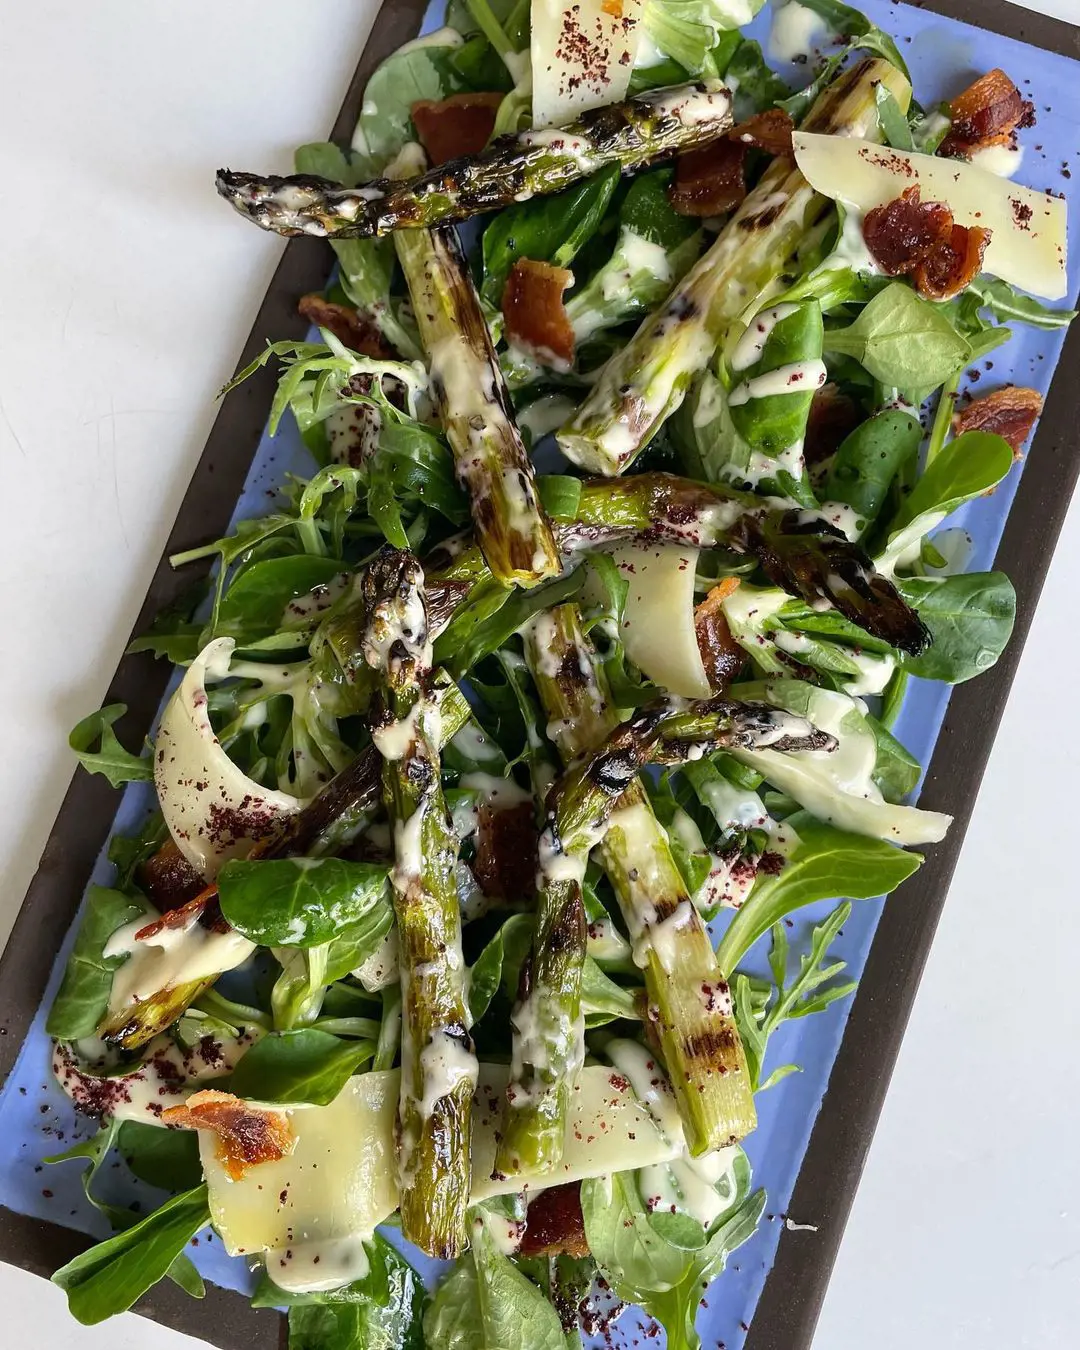 asparagus grilled on charcoals, crispy pancetta, kashkaval, lamb’s lettuce & rocket